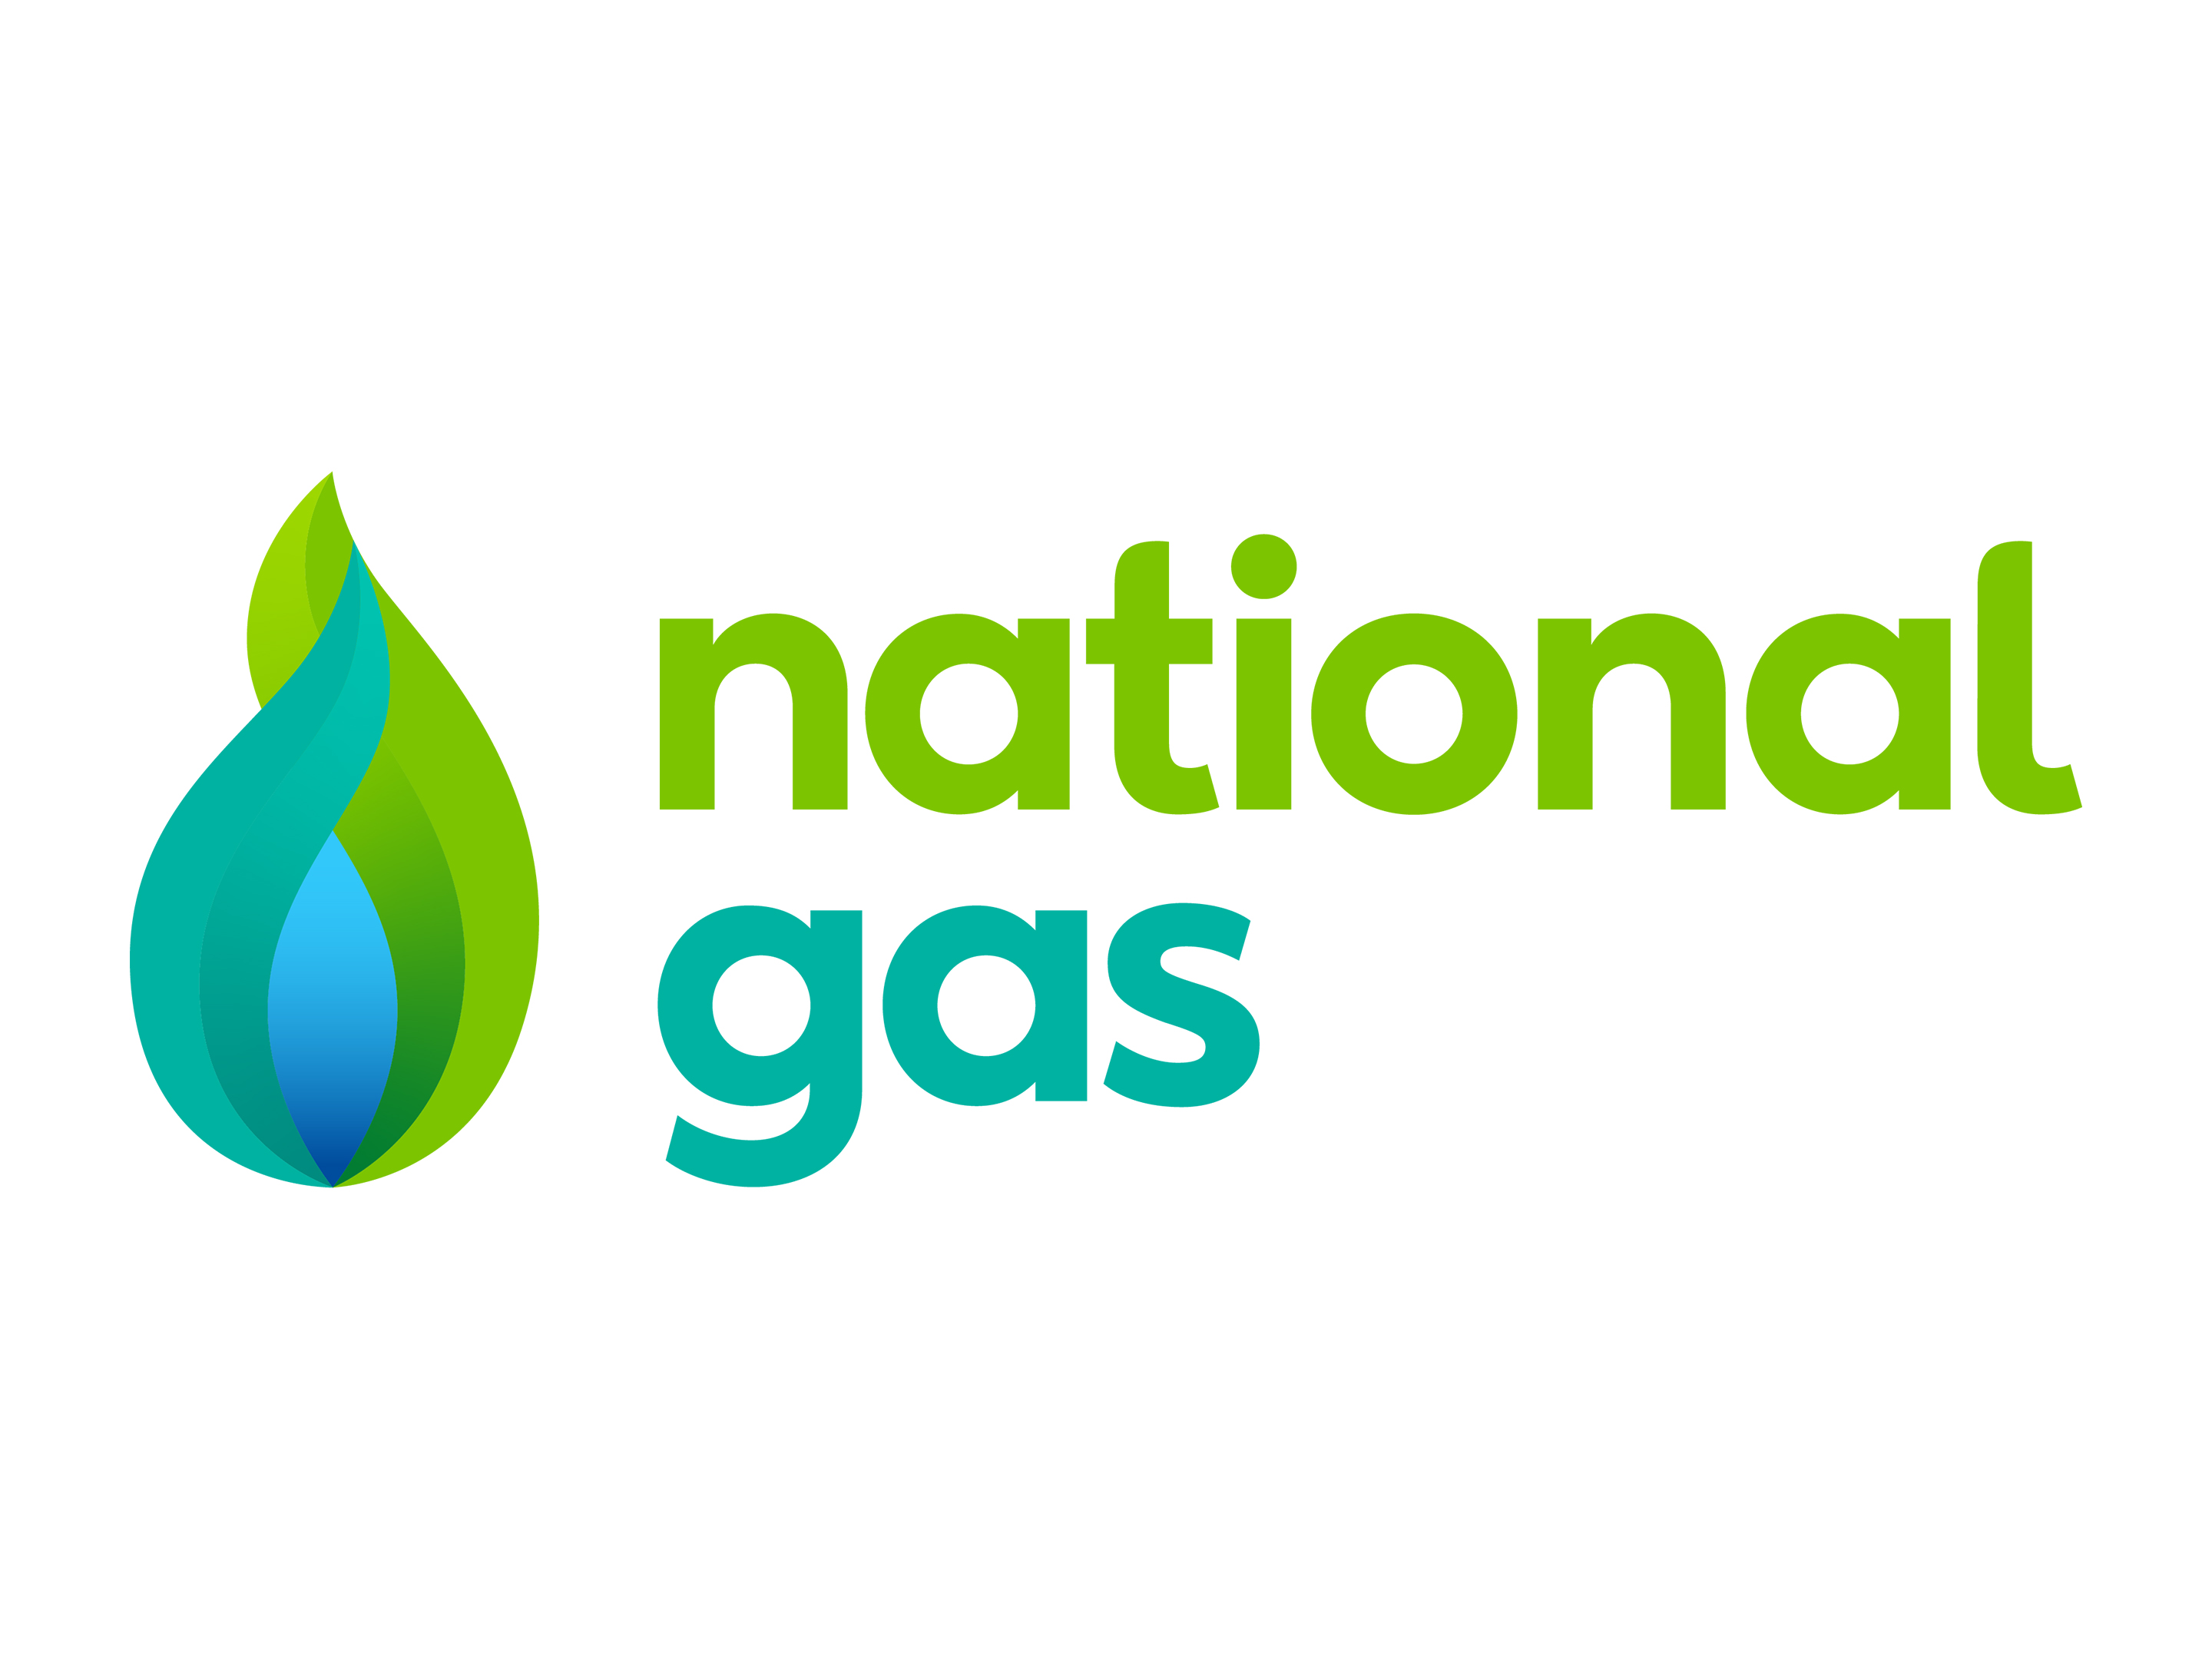 National Gas Logo